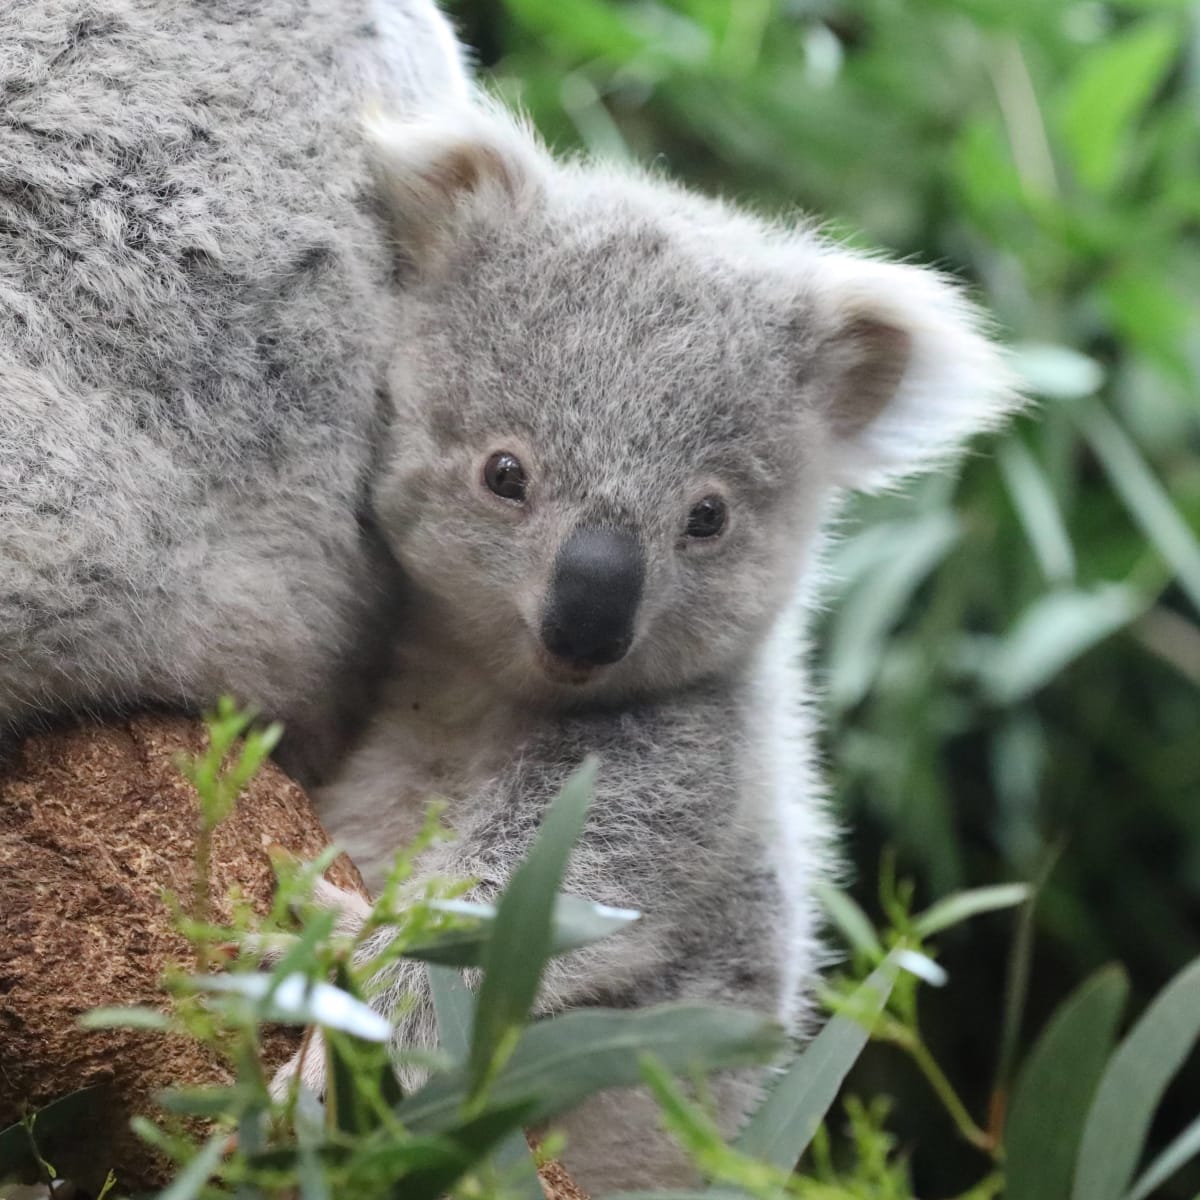 Woman Serves As 'Surrogate Mom' to Koala Joey and Everyone Wants